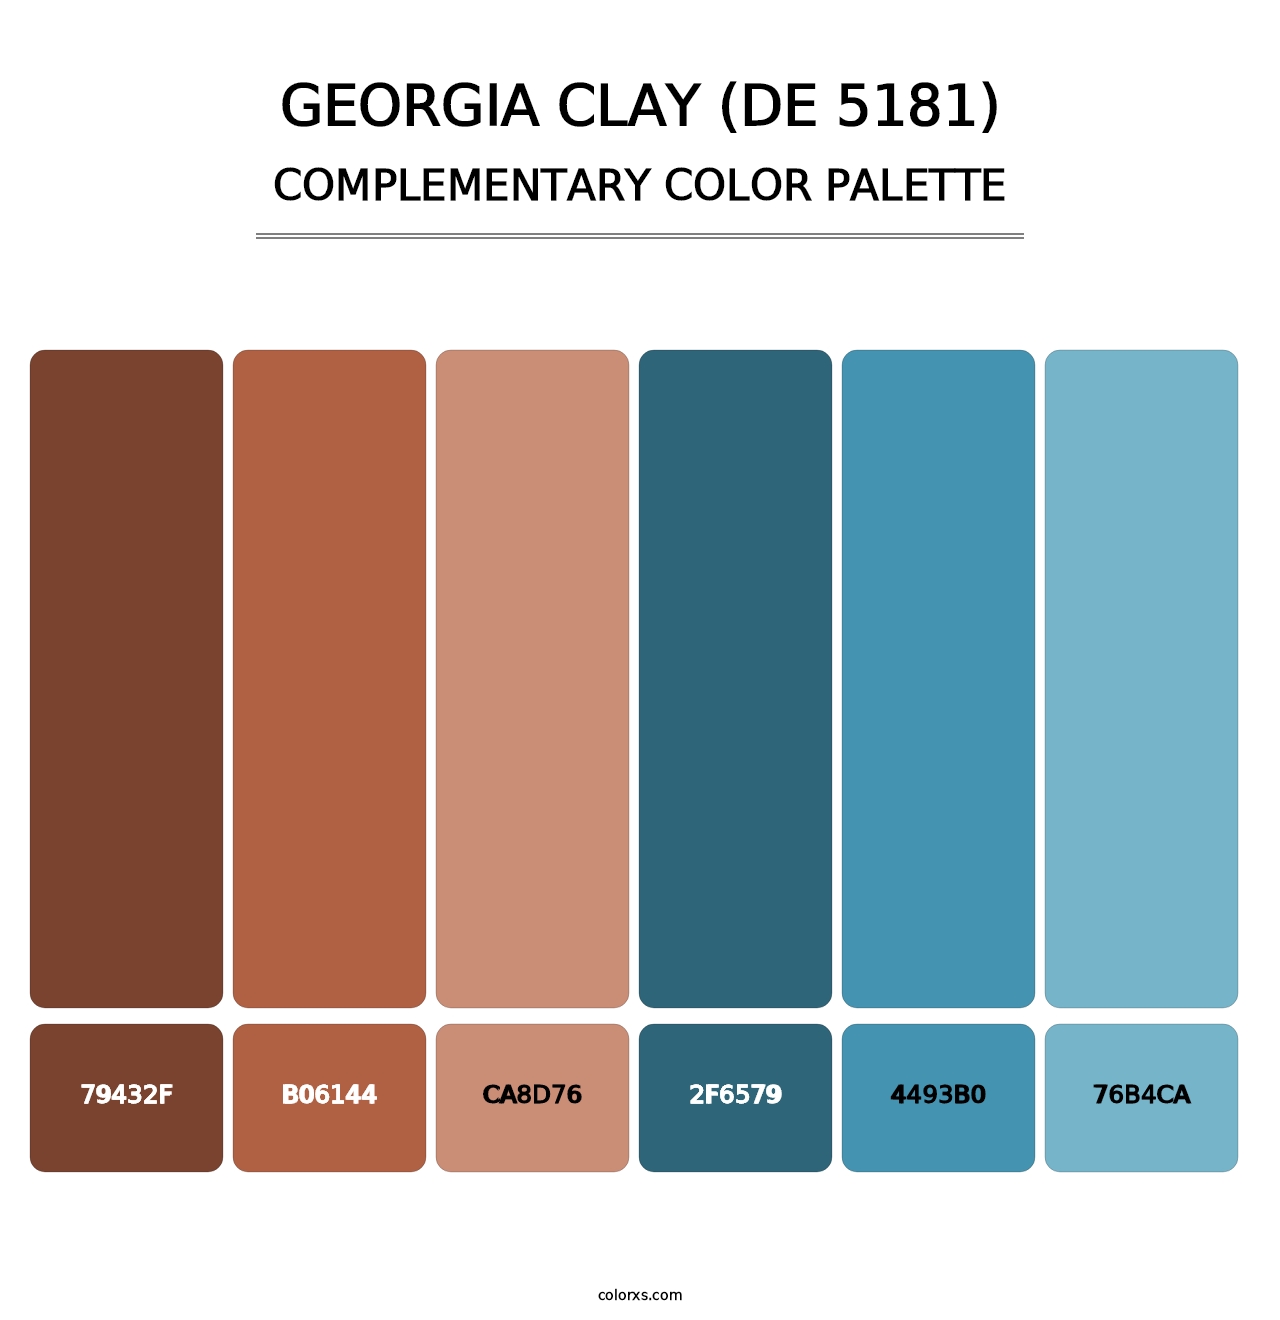 Georgia Clay (DE 5181) - Complementary Color Palette